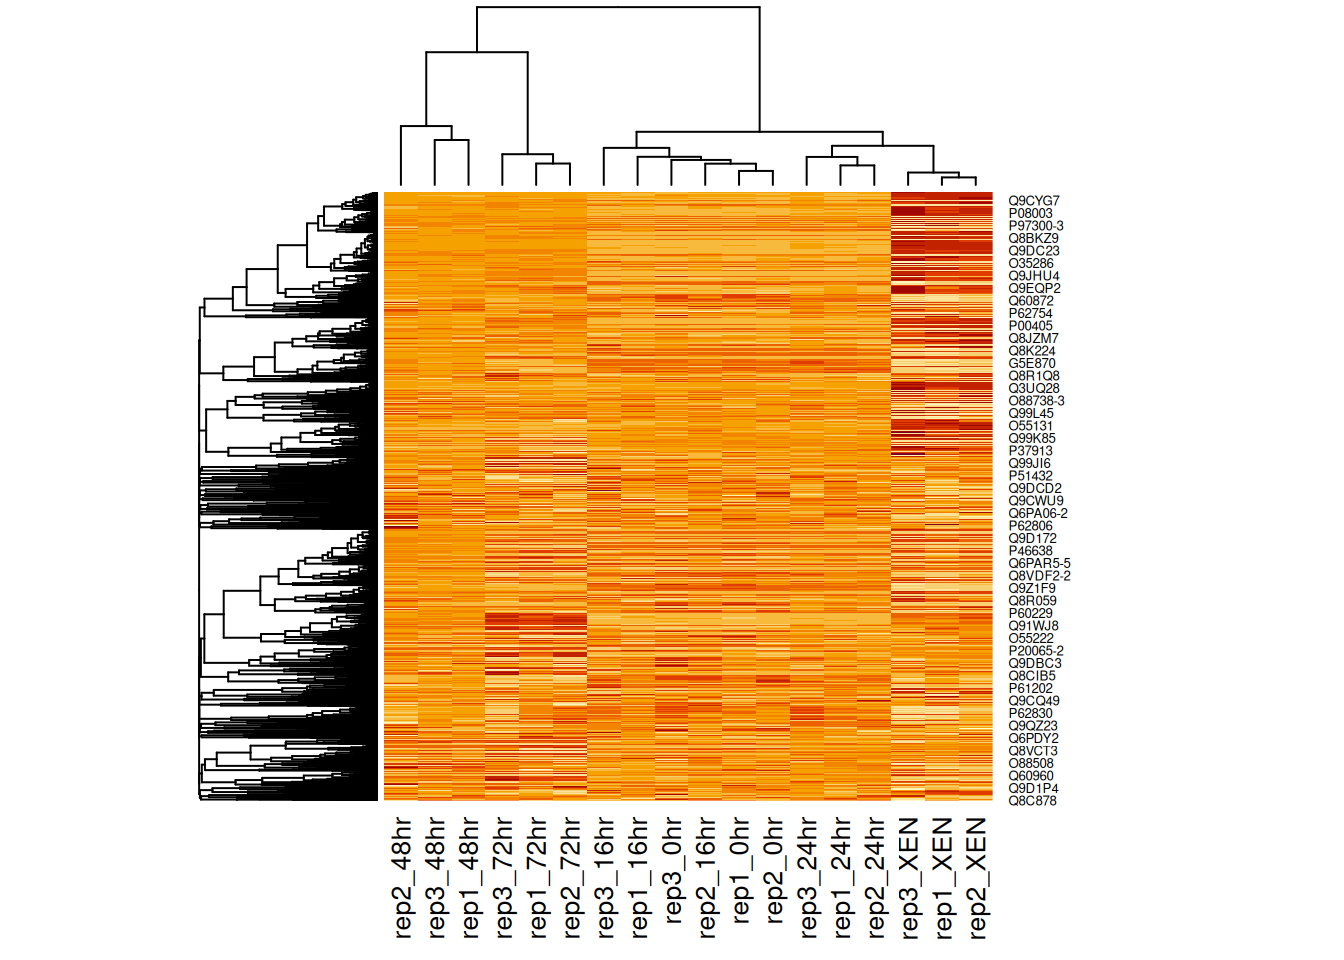 Heatmap of the (normalised) Mulvey et al. 2015 proteomic data using correlation distances.